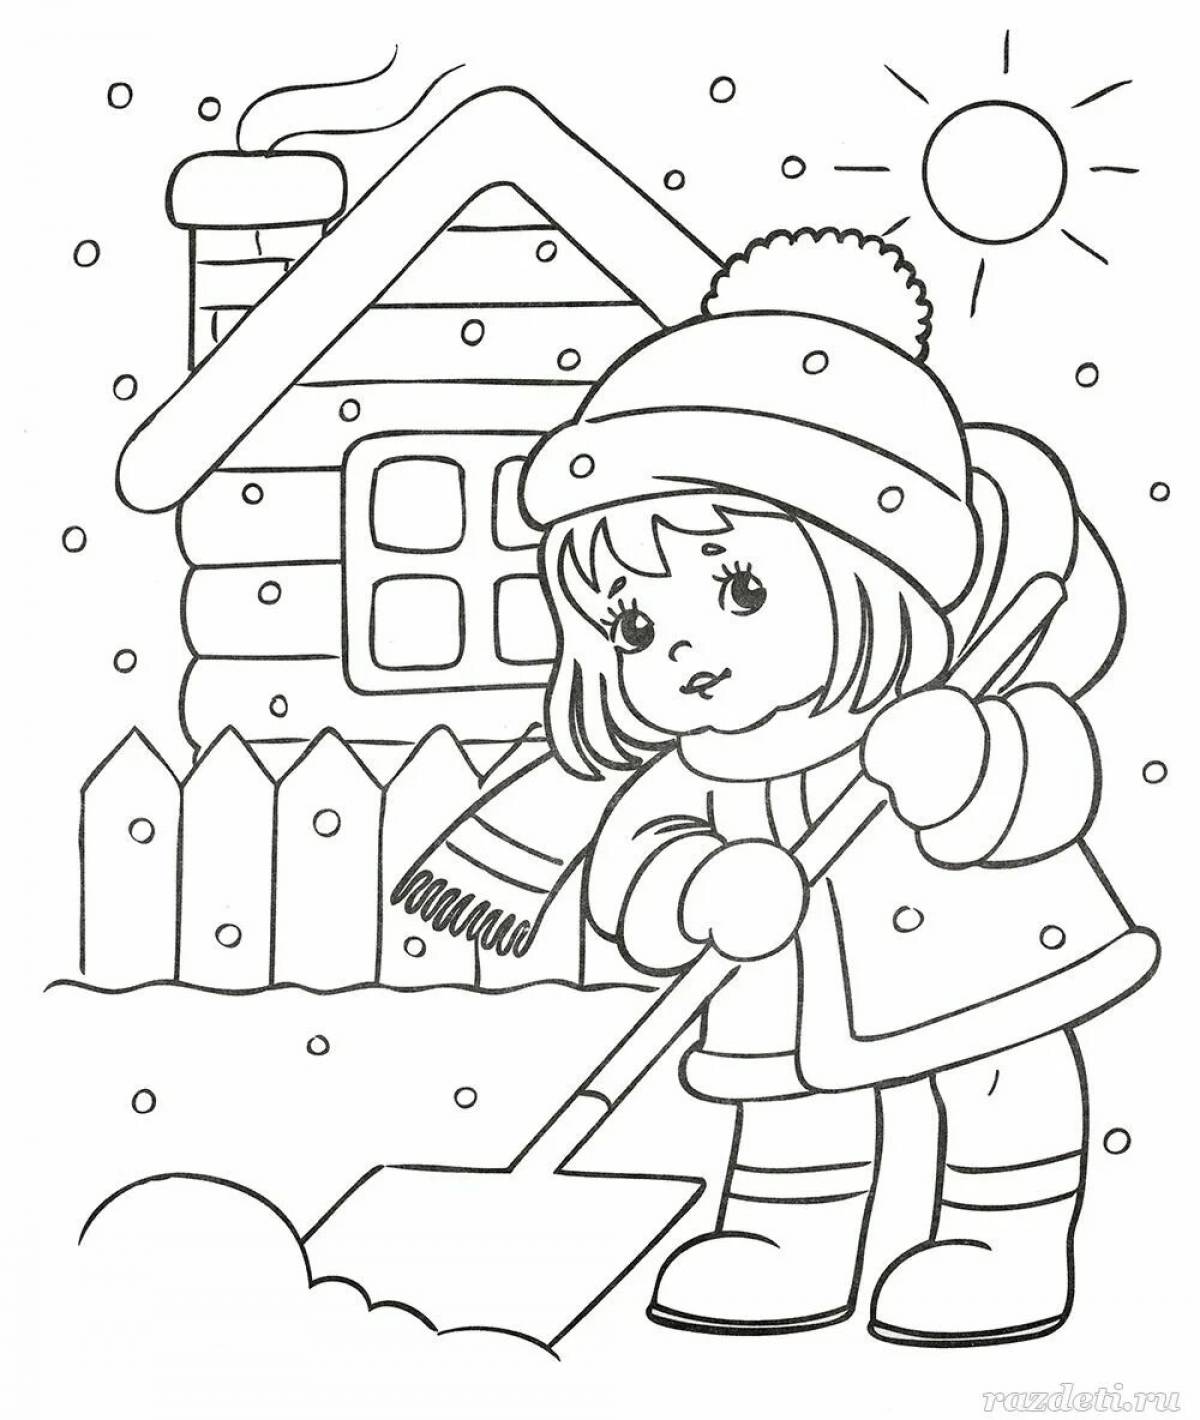 Coloring page winter wonderland